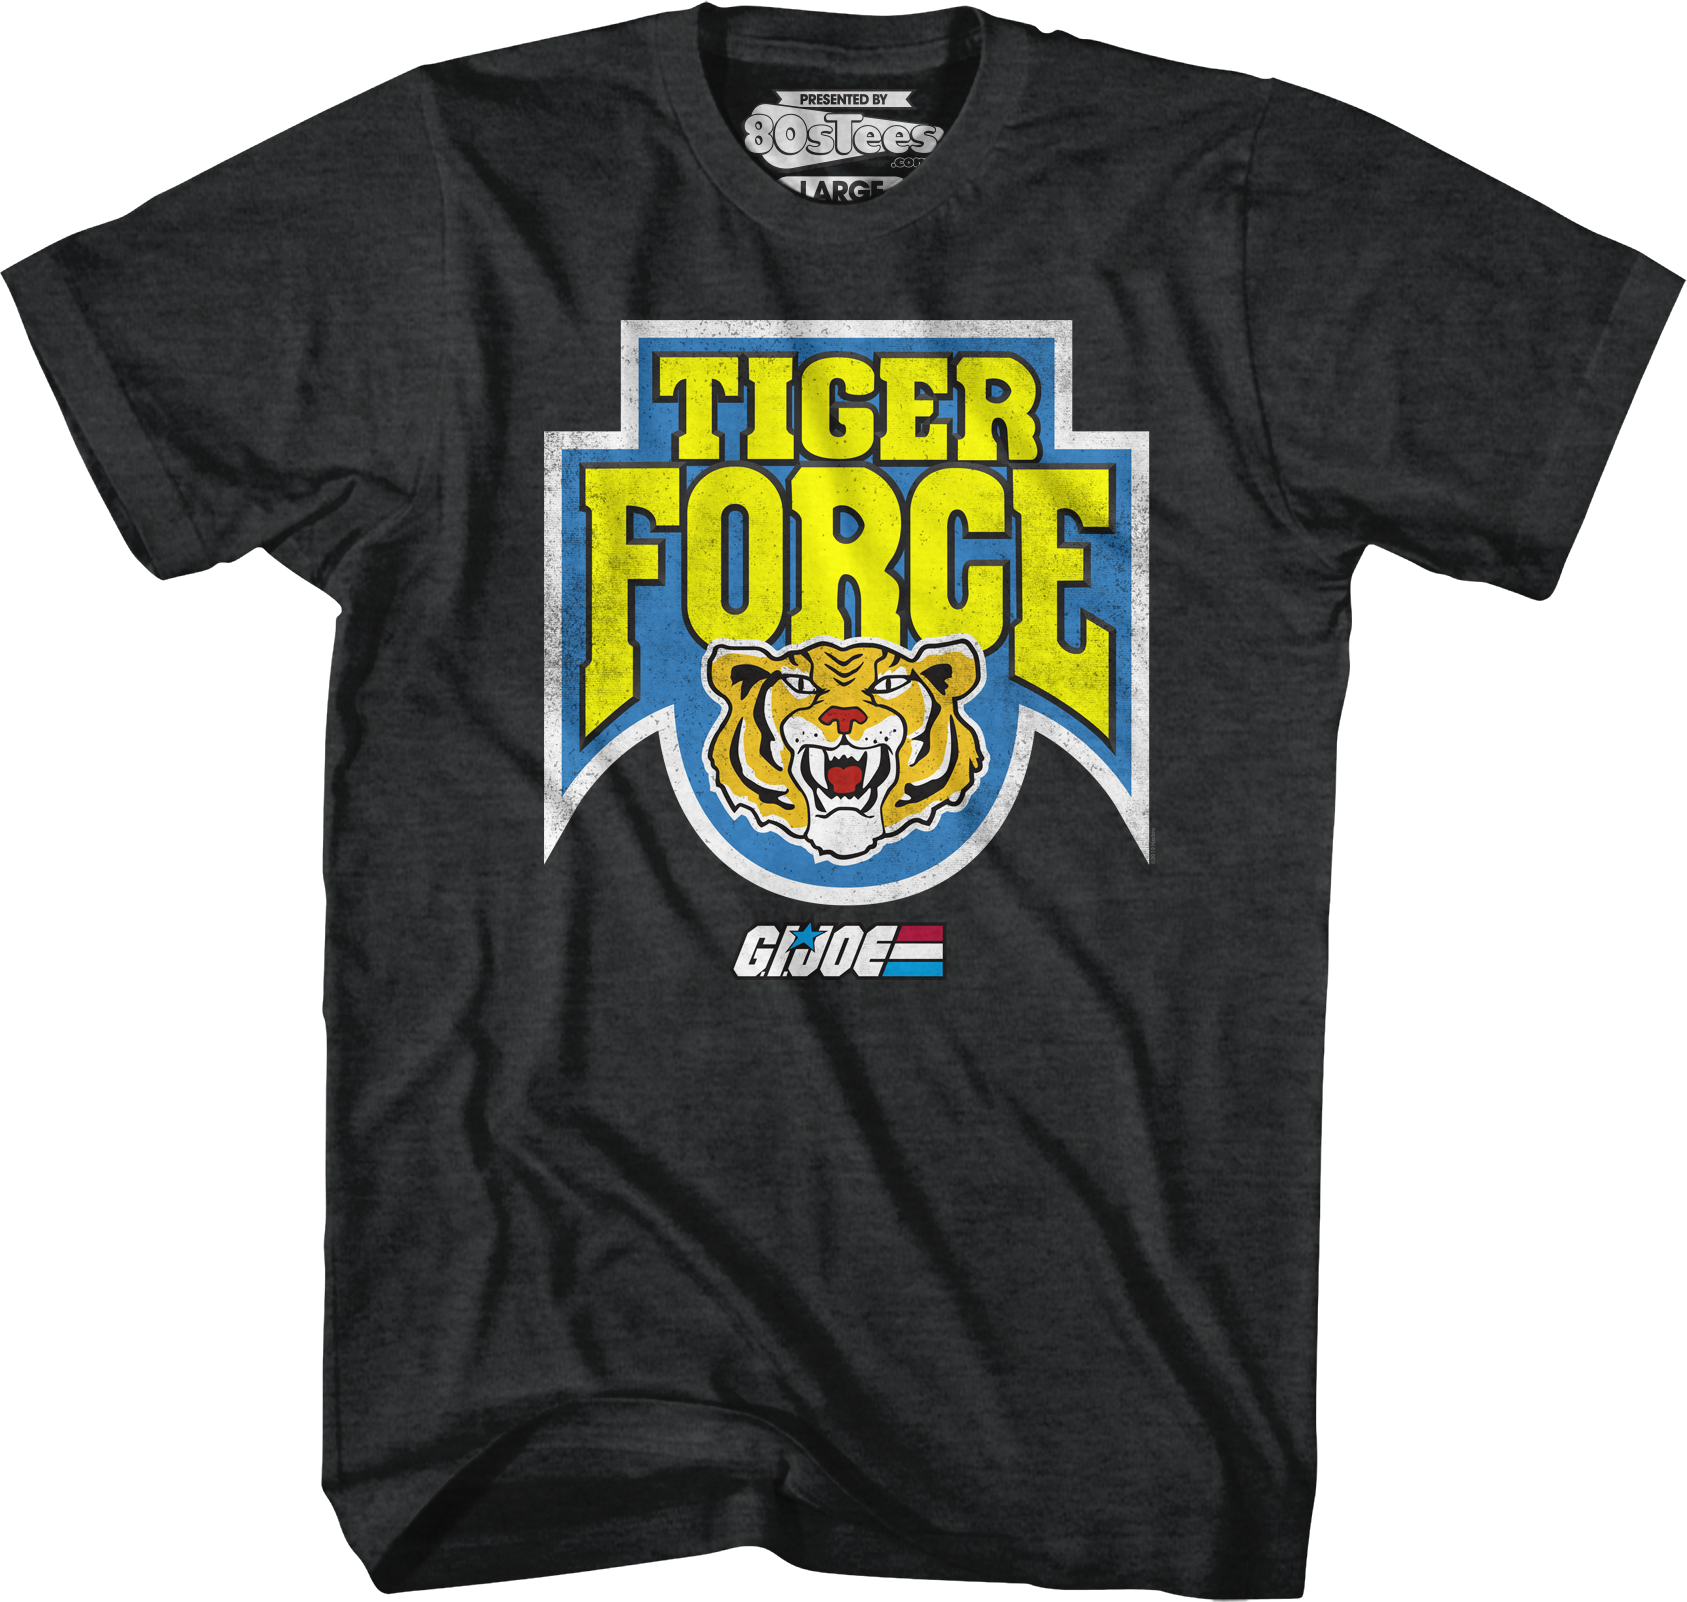 tiger force shirts